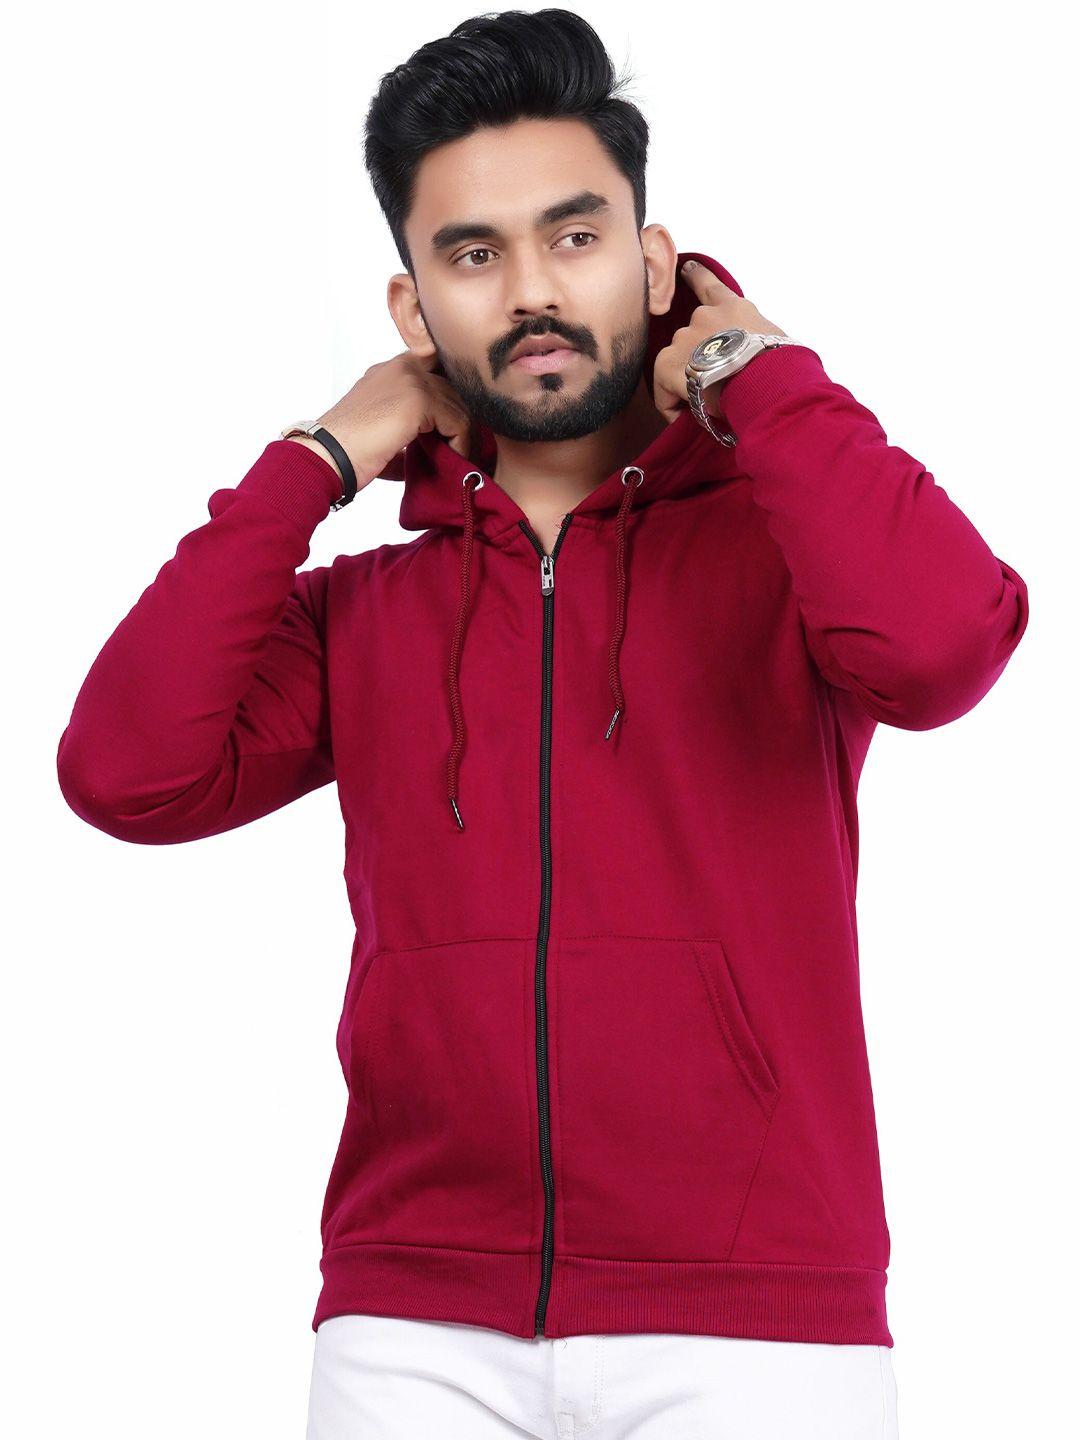 divra clothing unisex maroon hooded sweatshirt